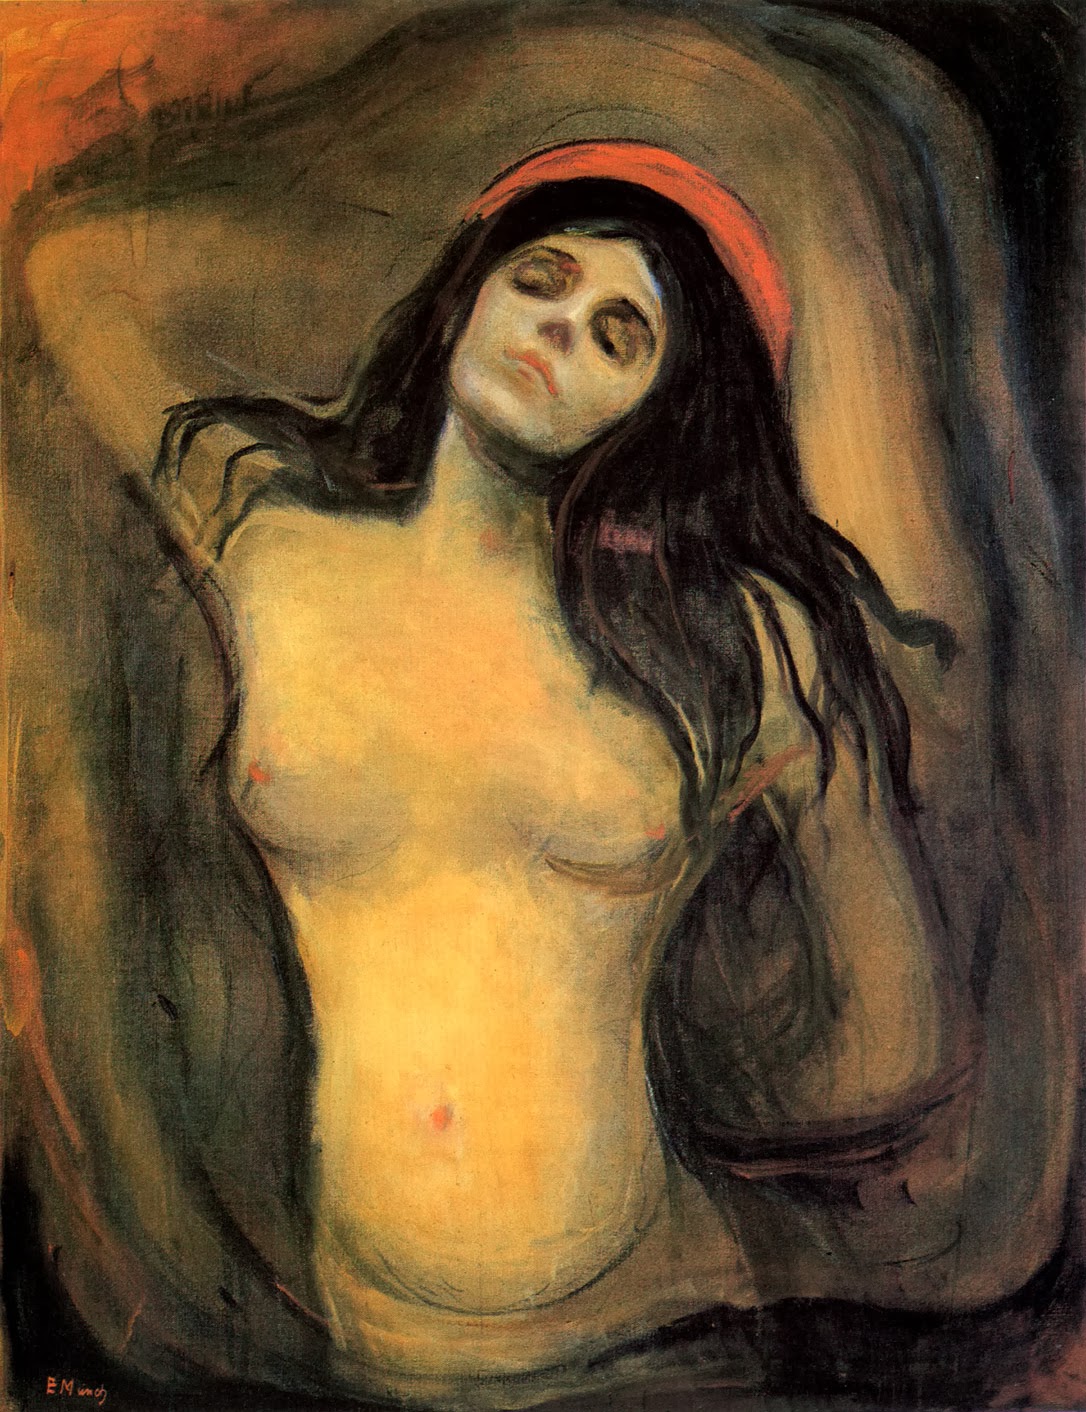 Edvard Munch's "Madonna"